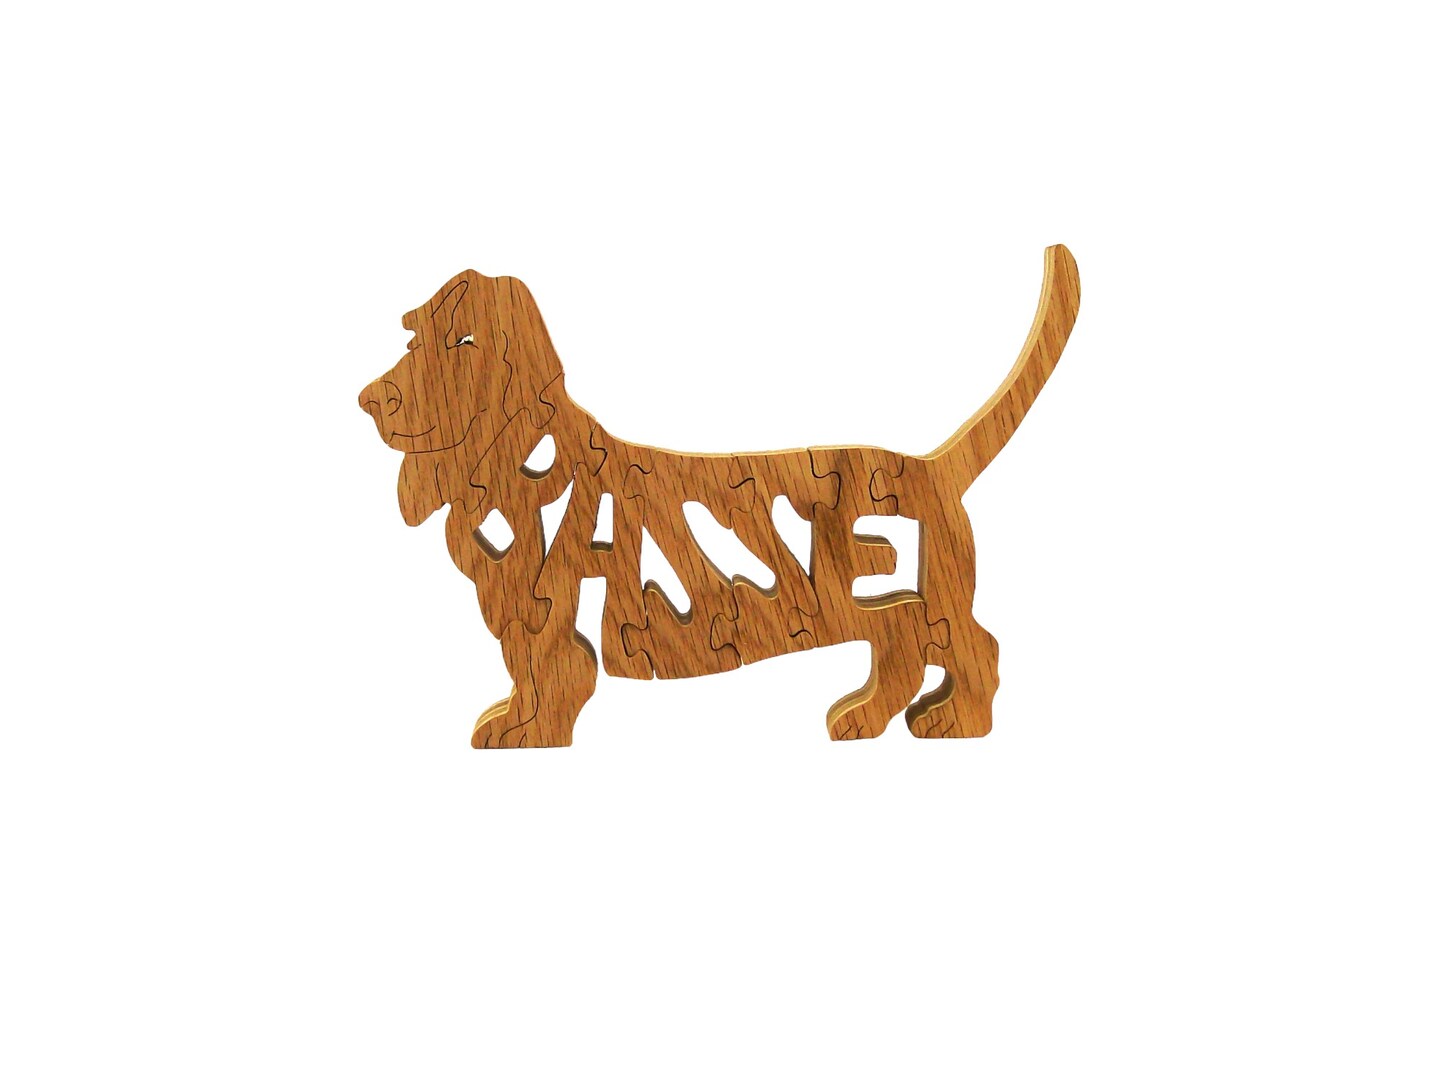 Basset Hound Dog puzzle, Hound dog puzzle, Basset hound dog puzzle